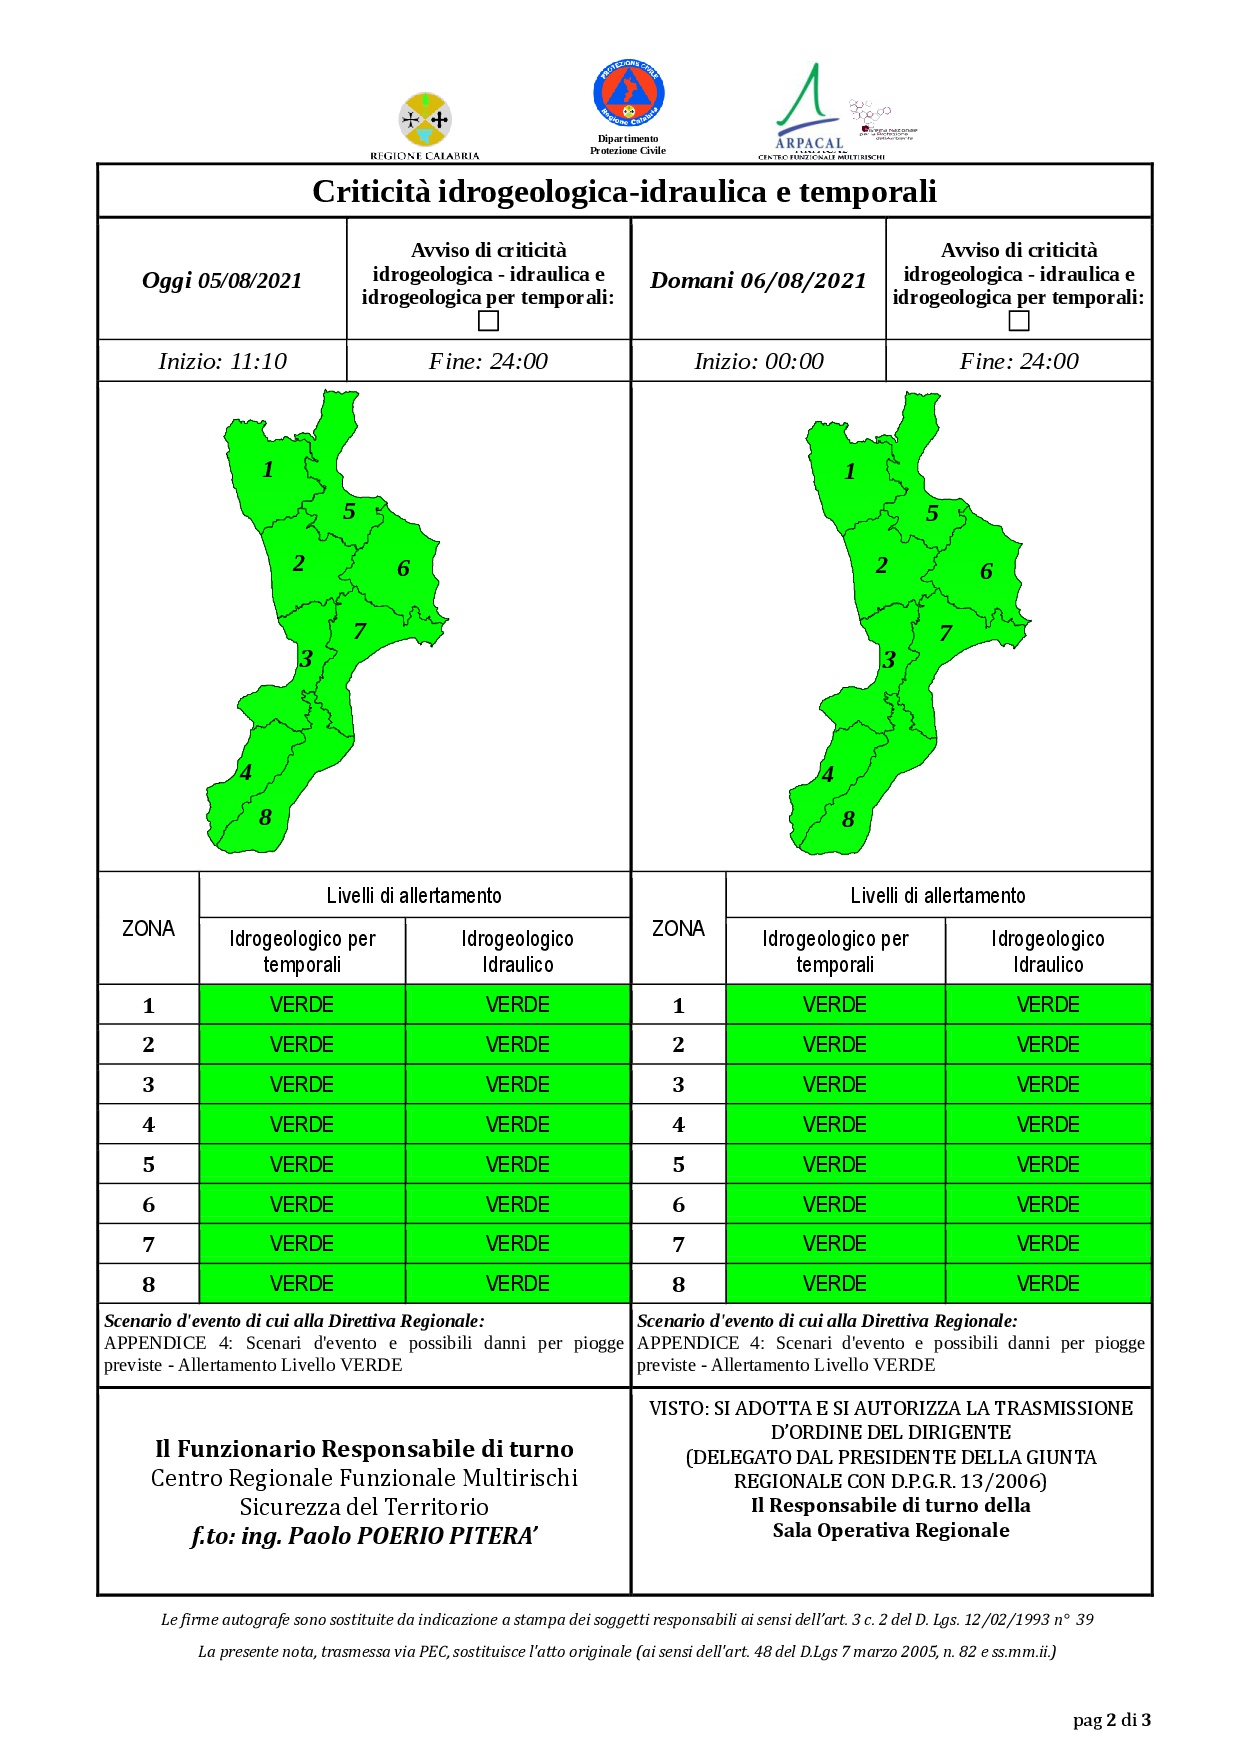 Criticità idrogeologica-idraulica e temporali in Calabria 05-08-2021